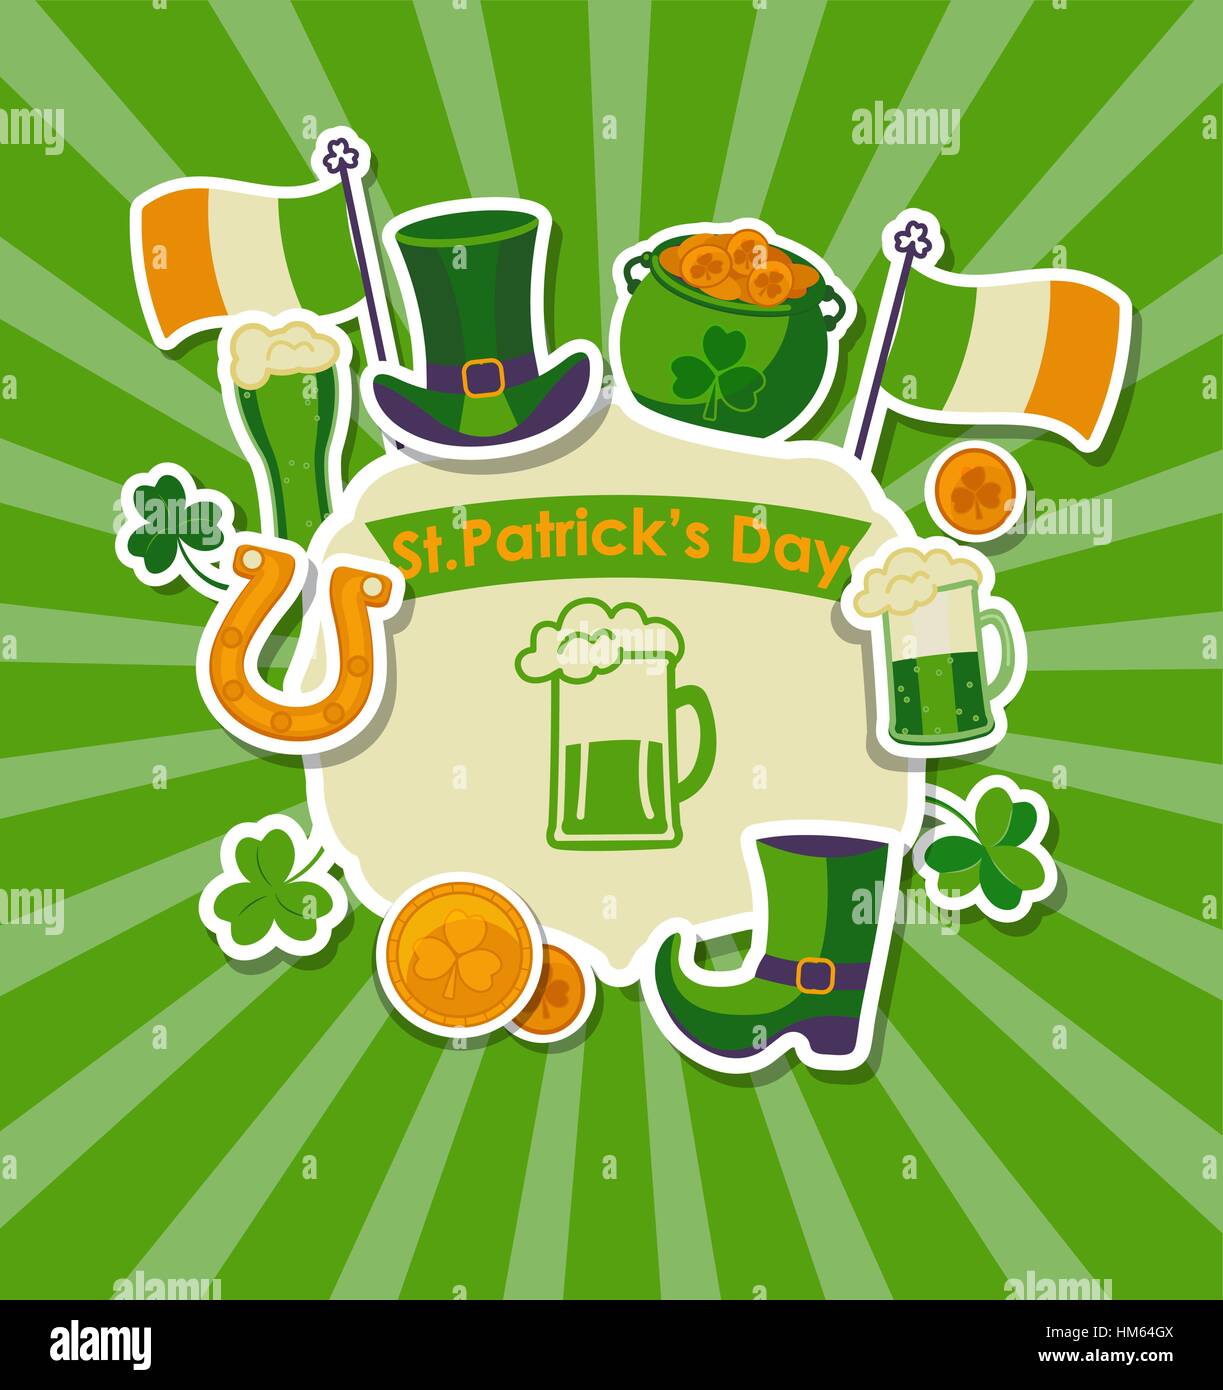 St Patrick's day design poster, vector illustration. Stock Vector